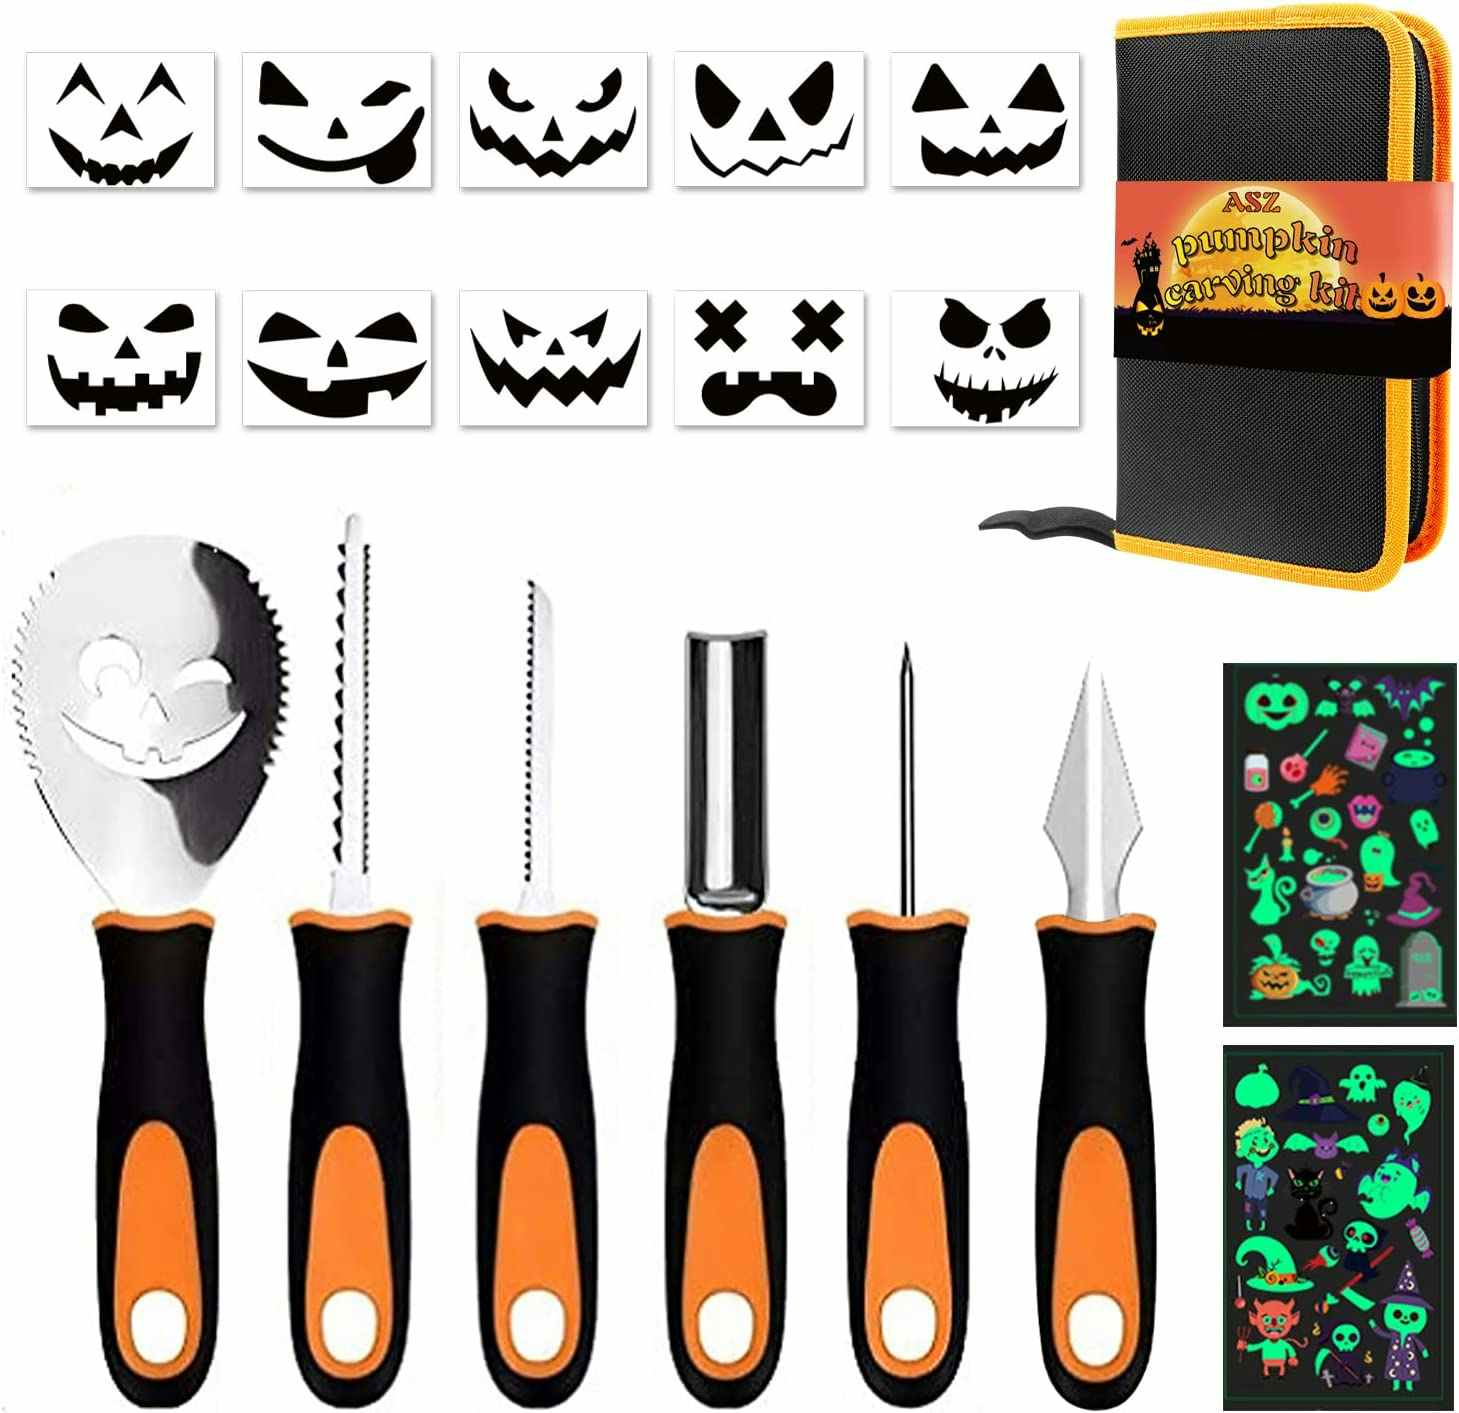 best pumpkin carving kit - An ASZ Pumpkin Carving Kit on a white background